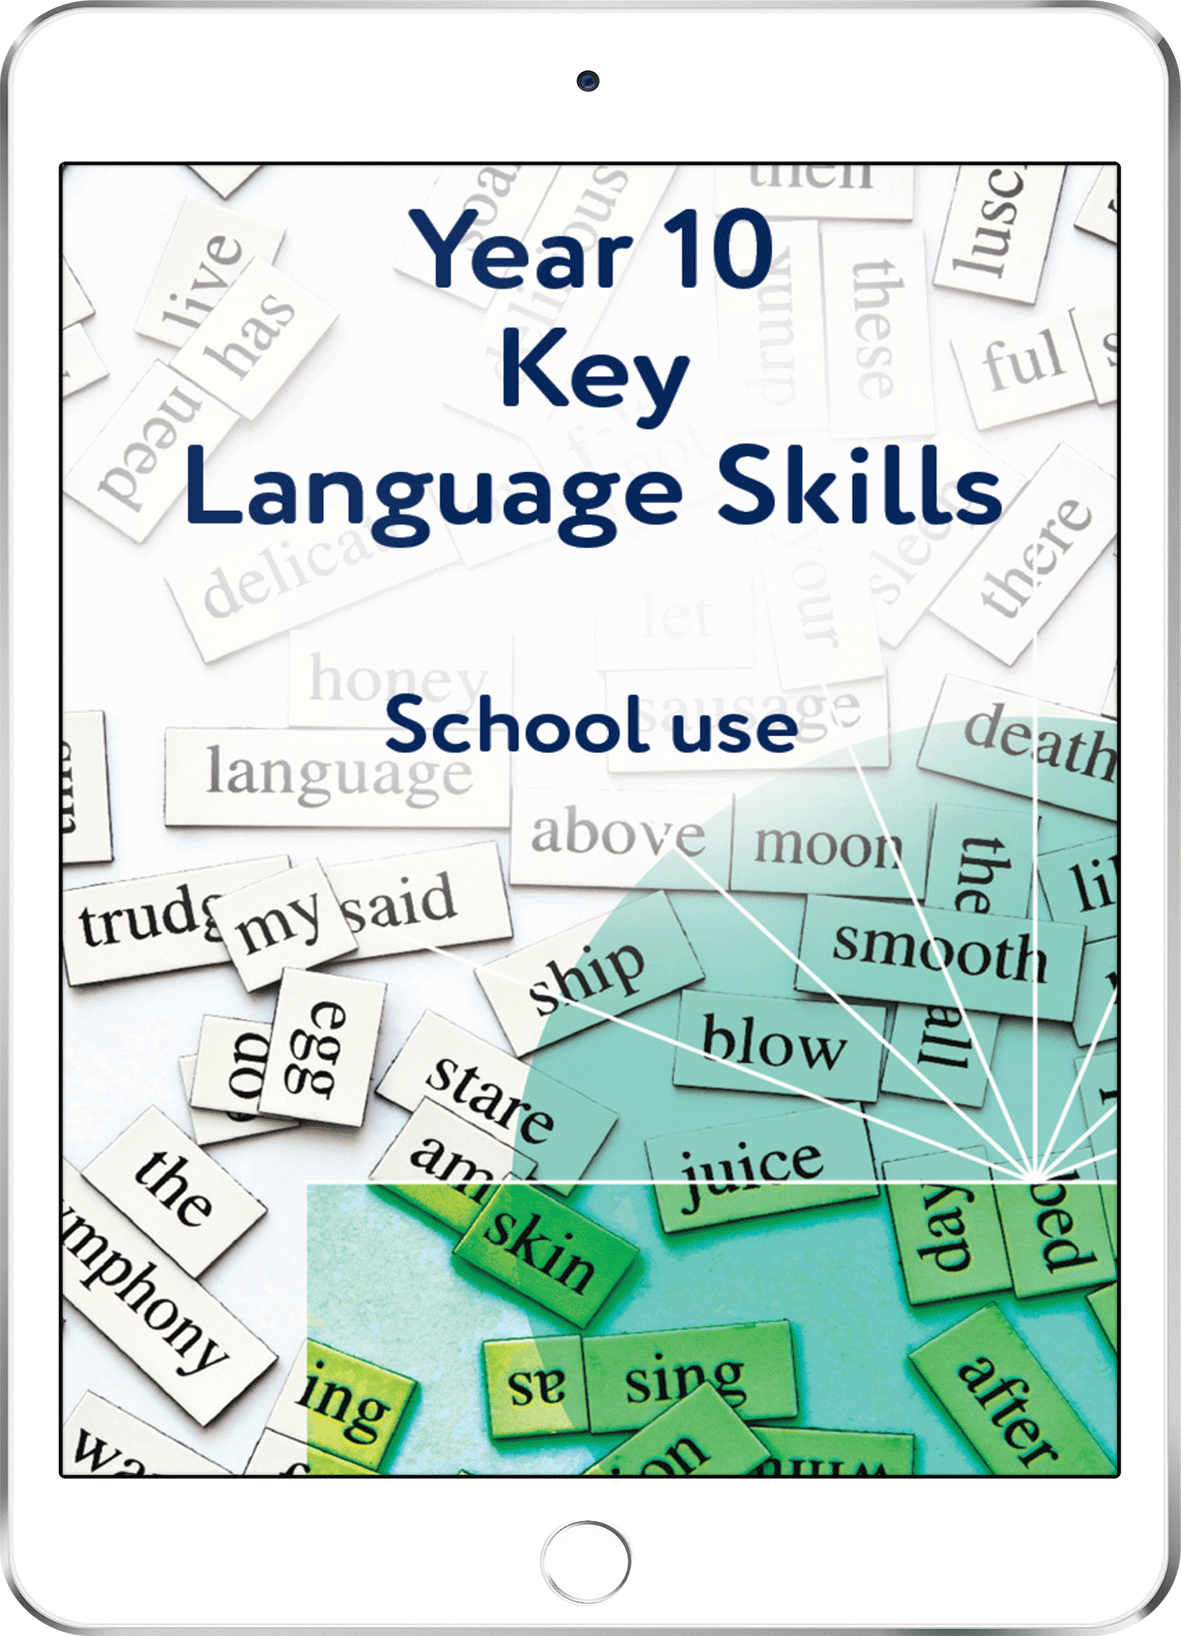 Year 10 Key Language Skills - School Use